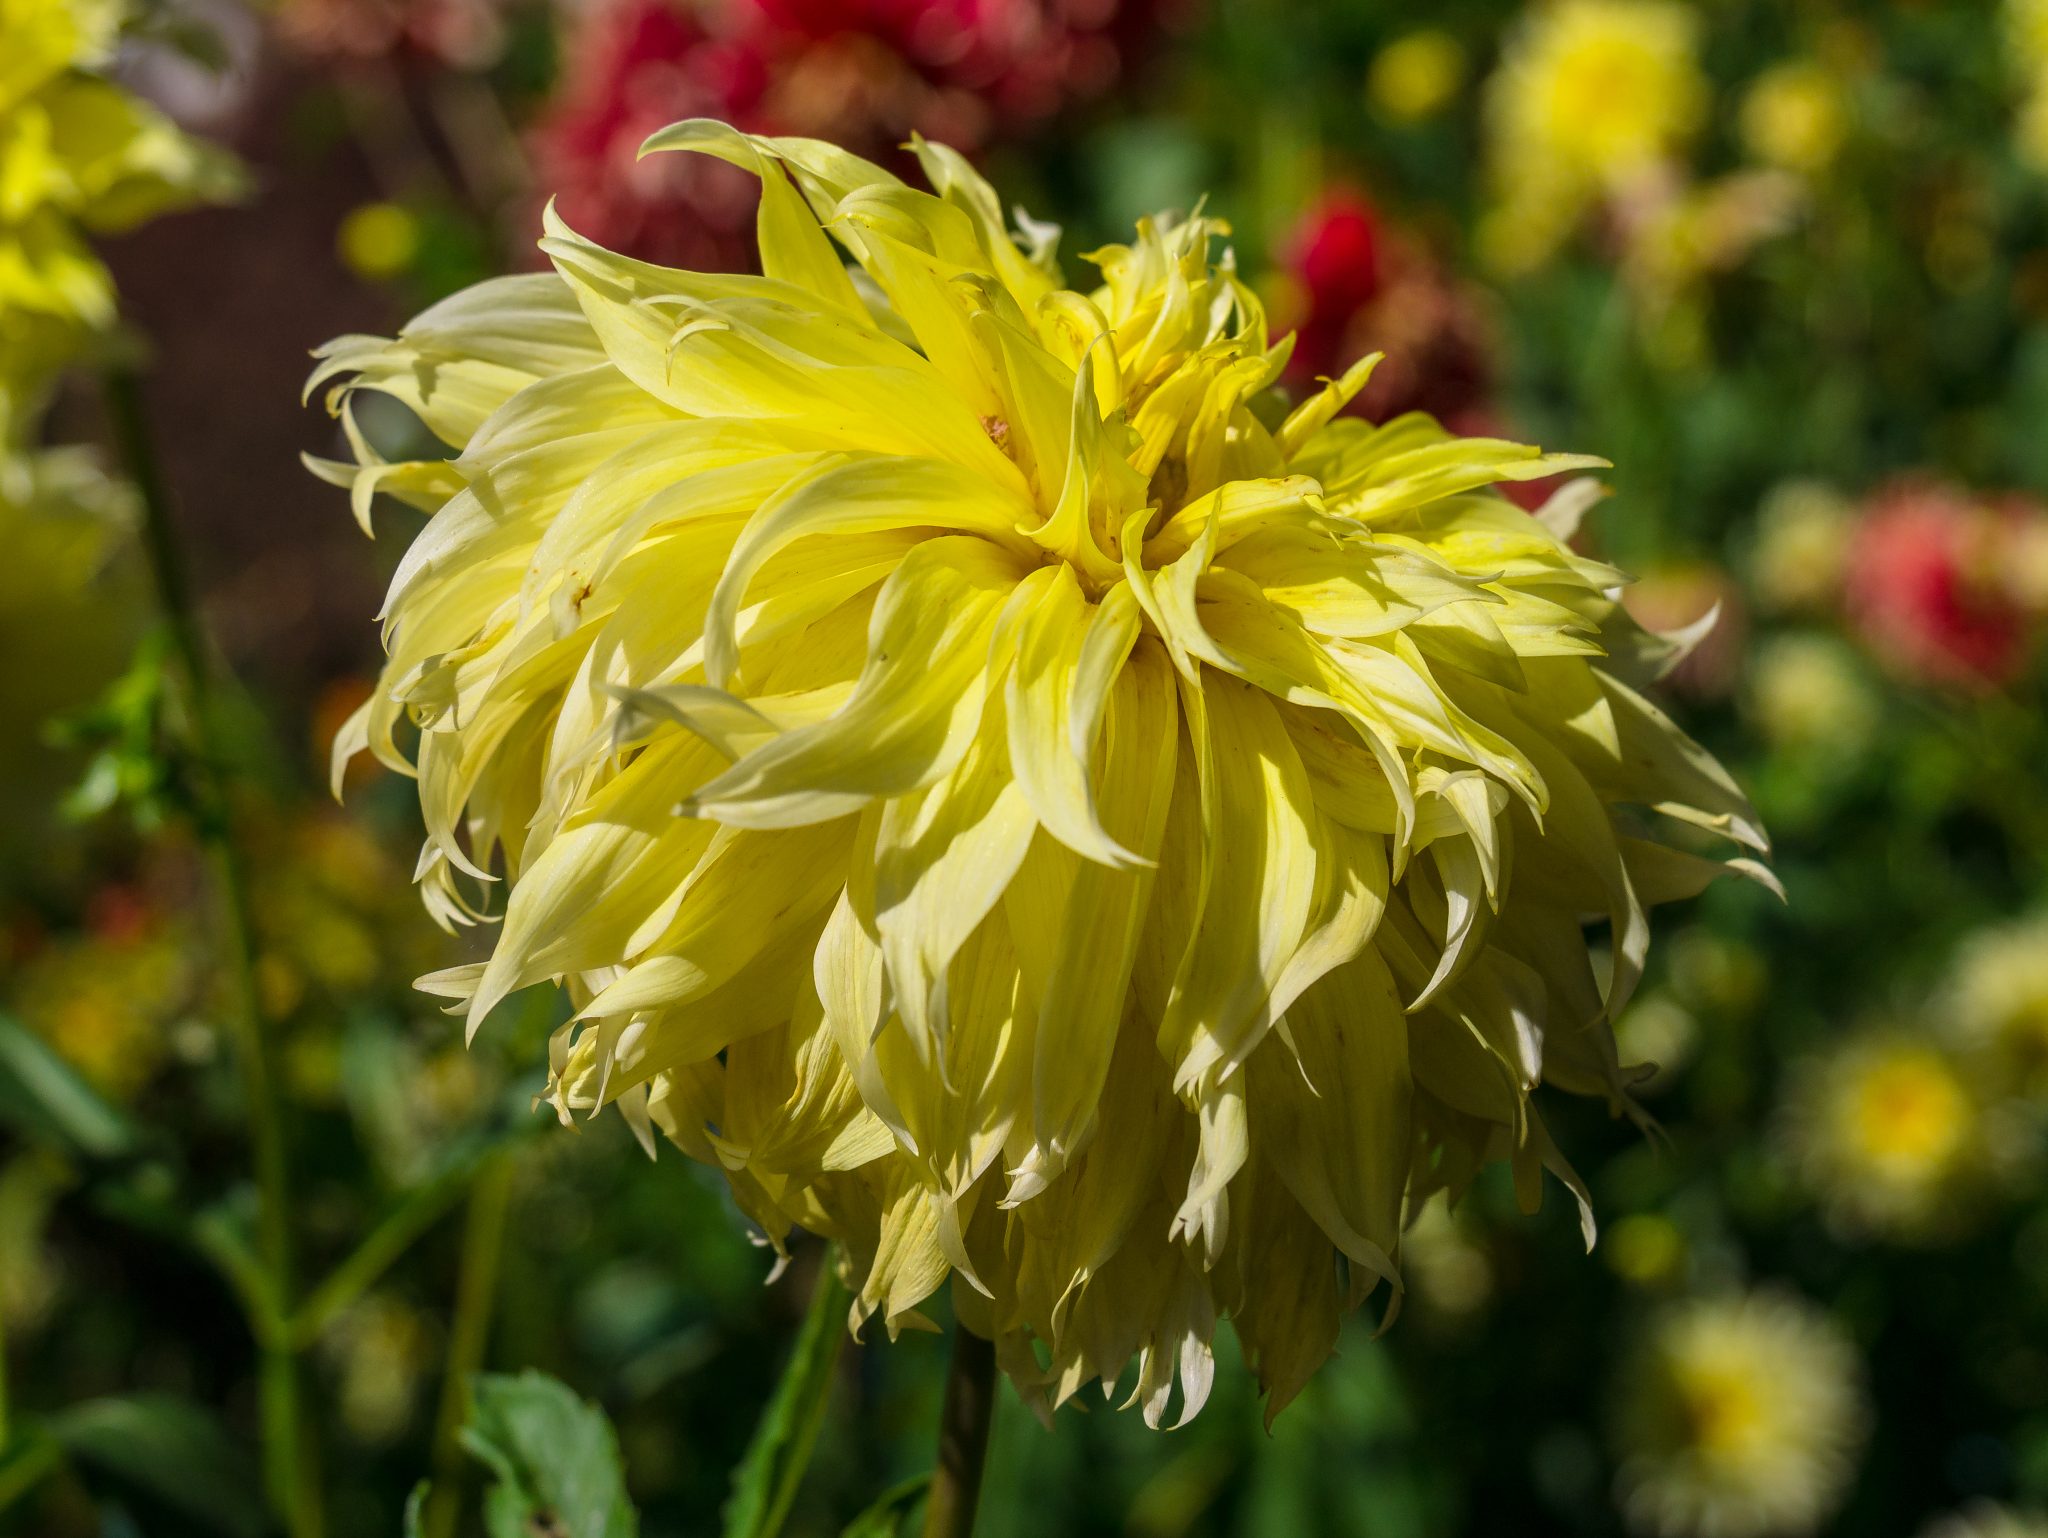 Yellow Dahlia flower